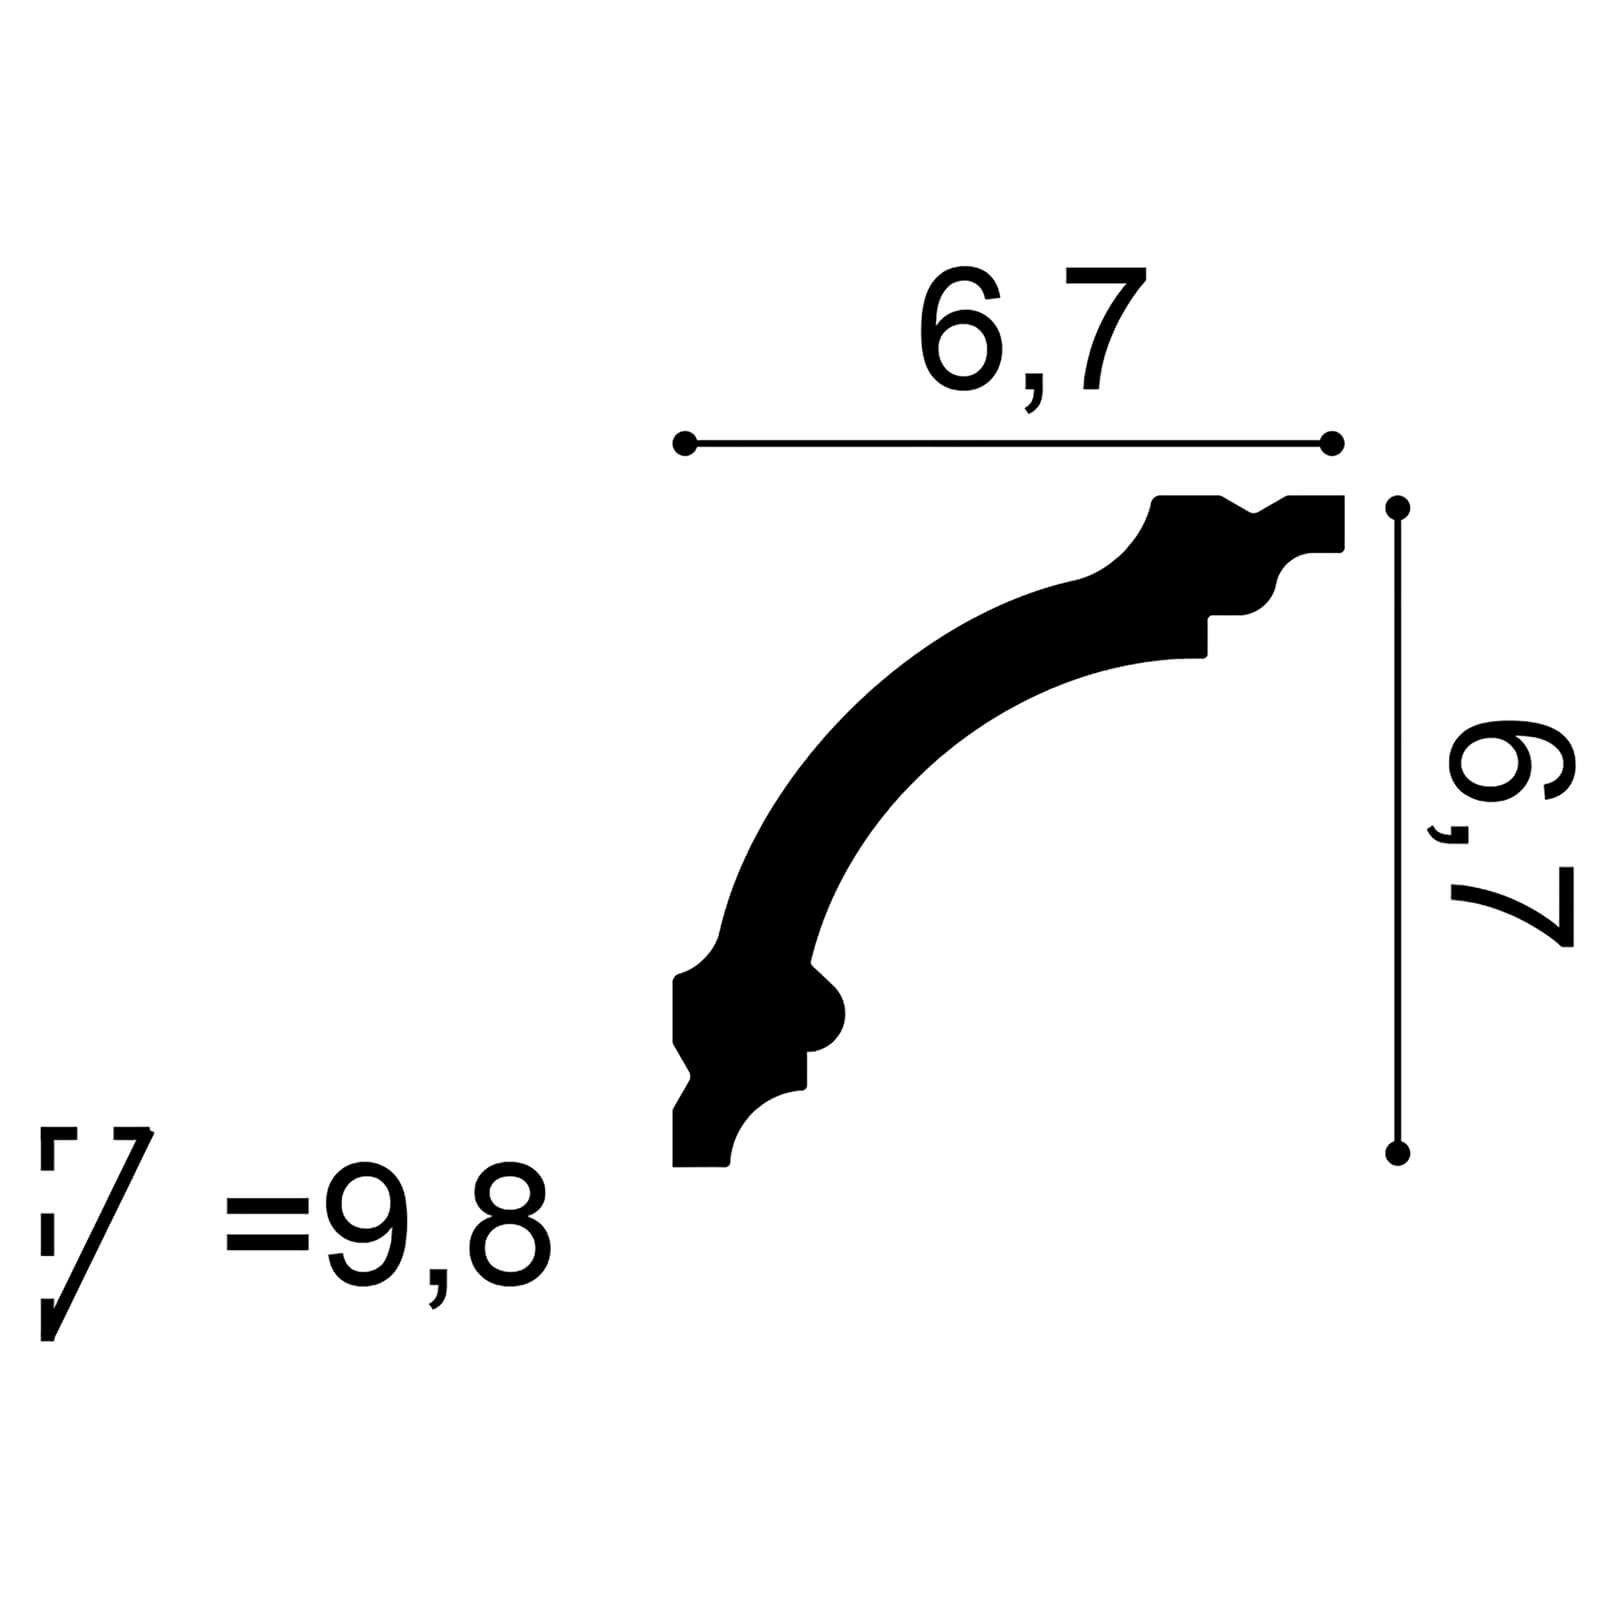 Durofoam Coving Linear Profile 67x67mm - 2m Length Pack of 12